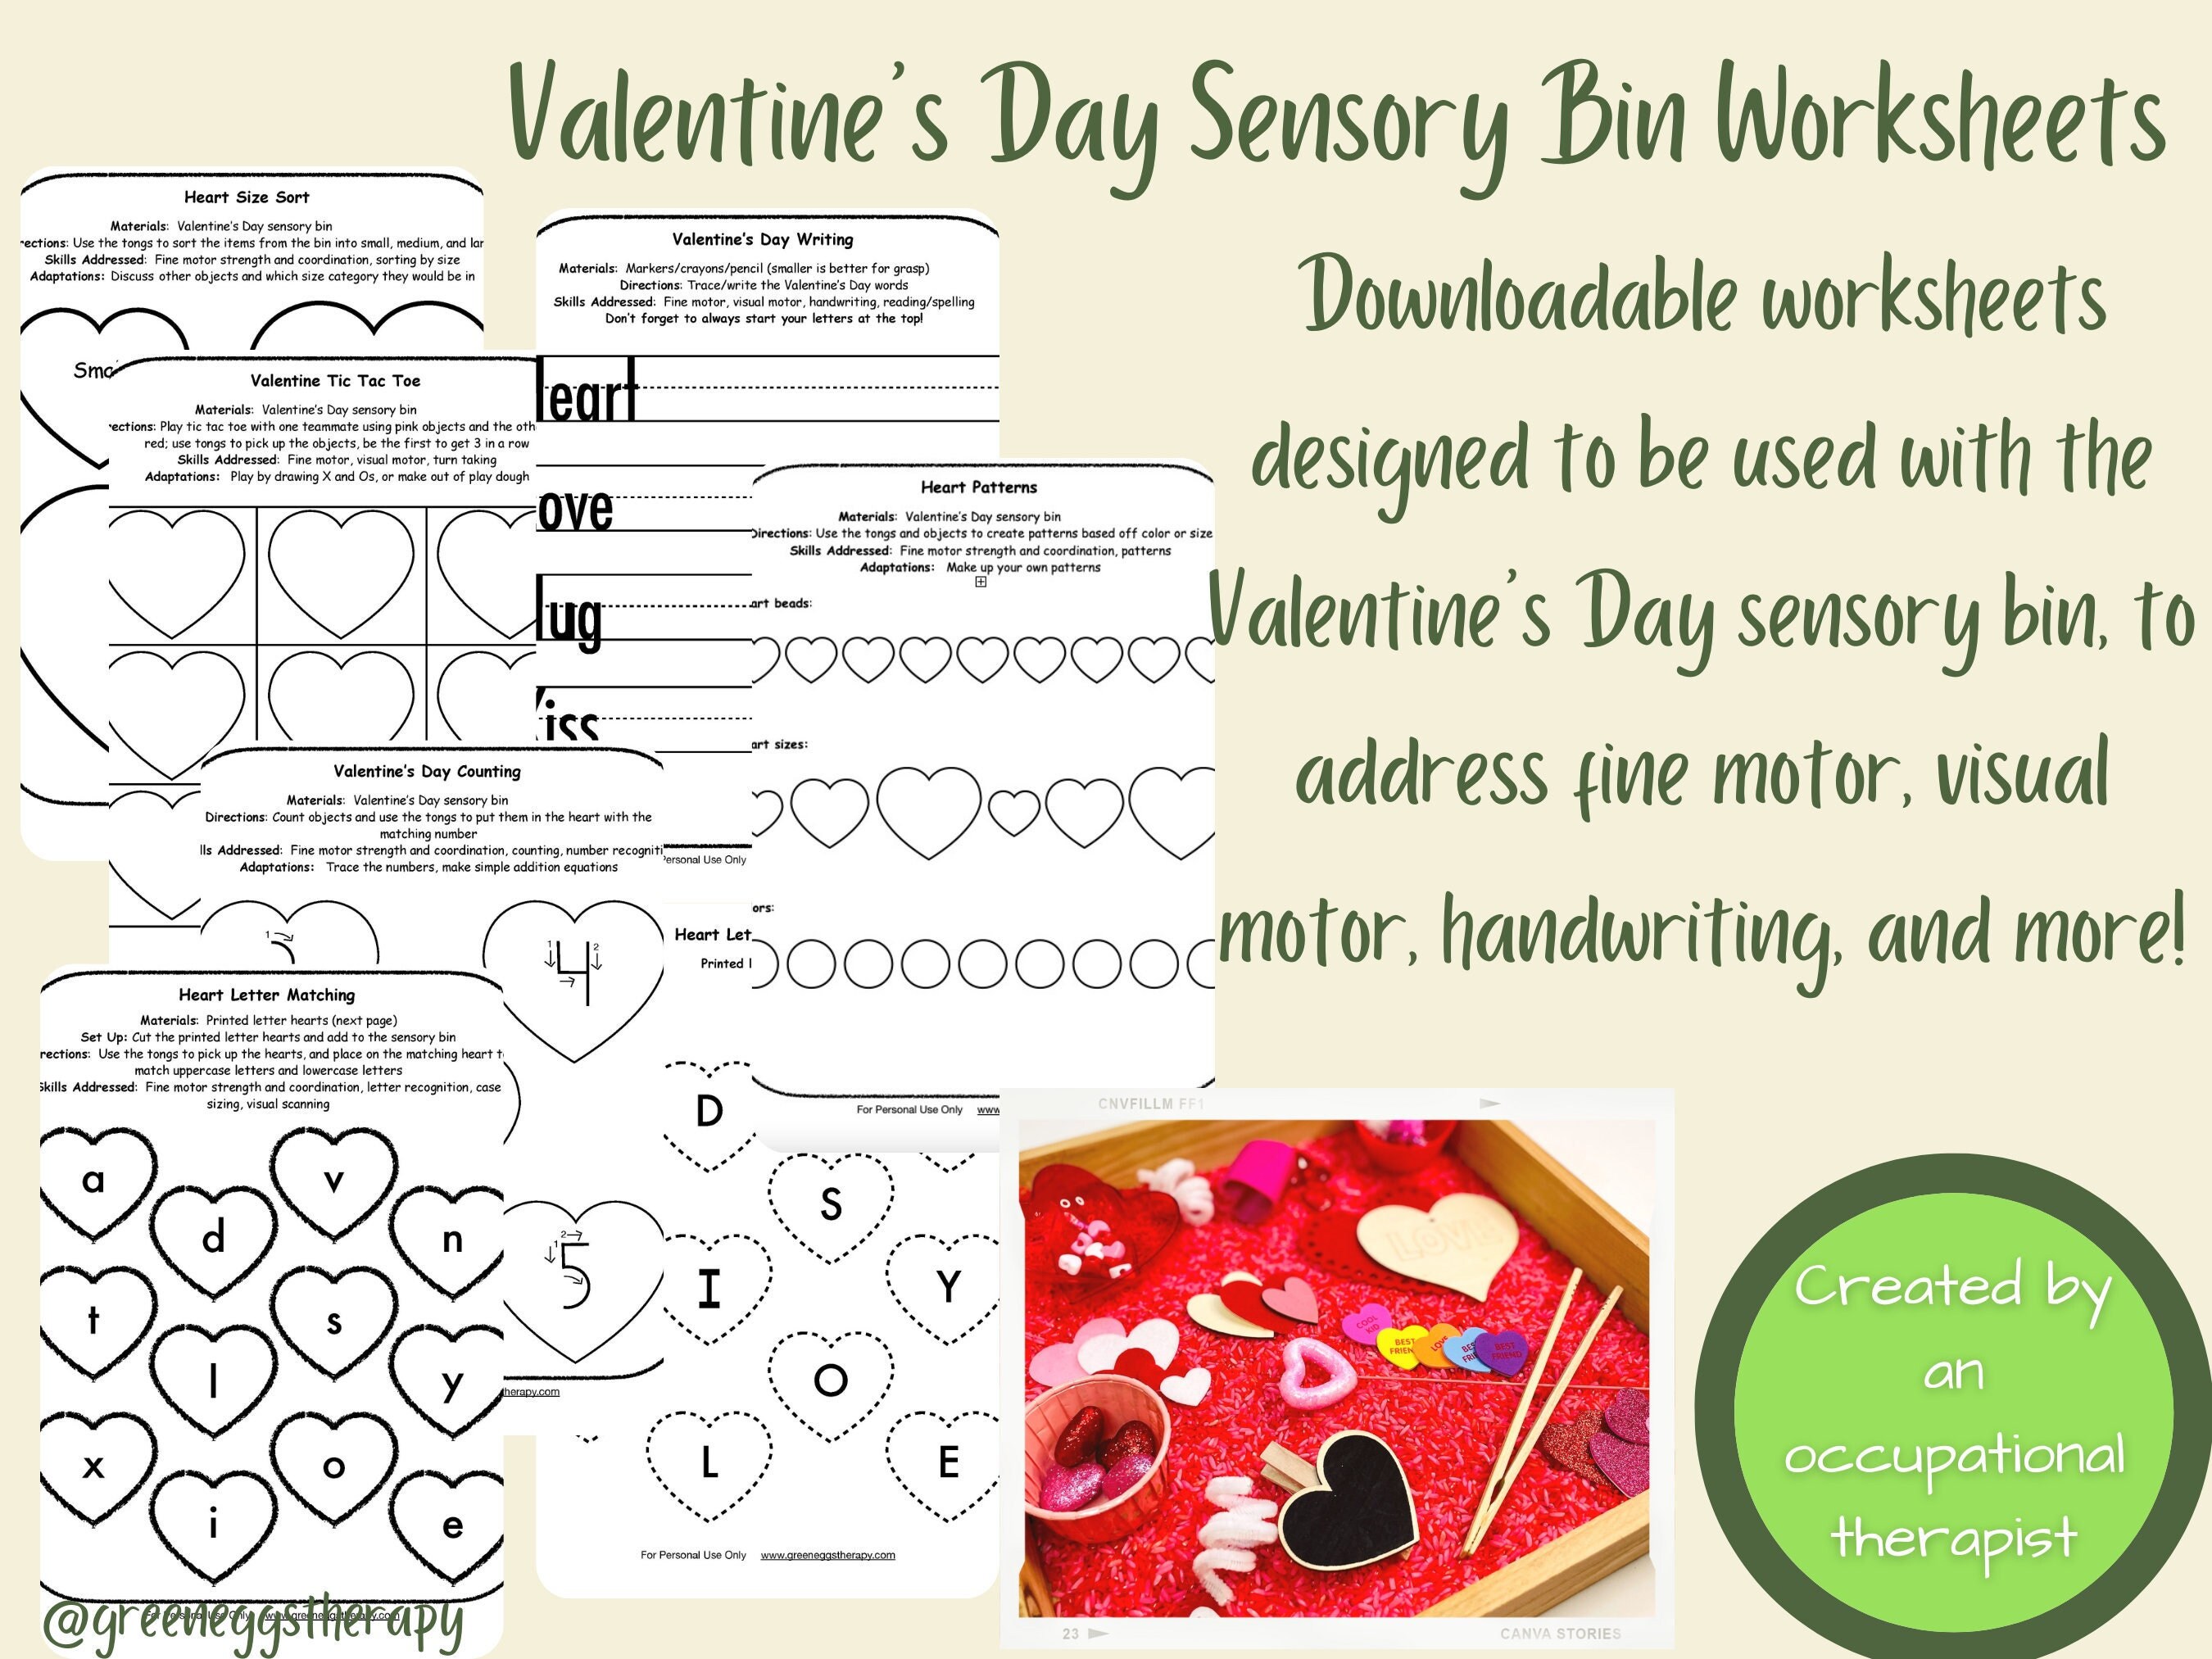 Valentine's Day Sensory Kit, Valentine Gift for Kids, Valentines Gift for  Toddlers, Sensory Gifts for Kids, Kids Gift, Toddler Gift 